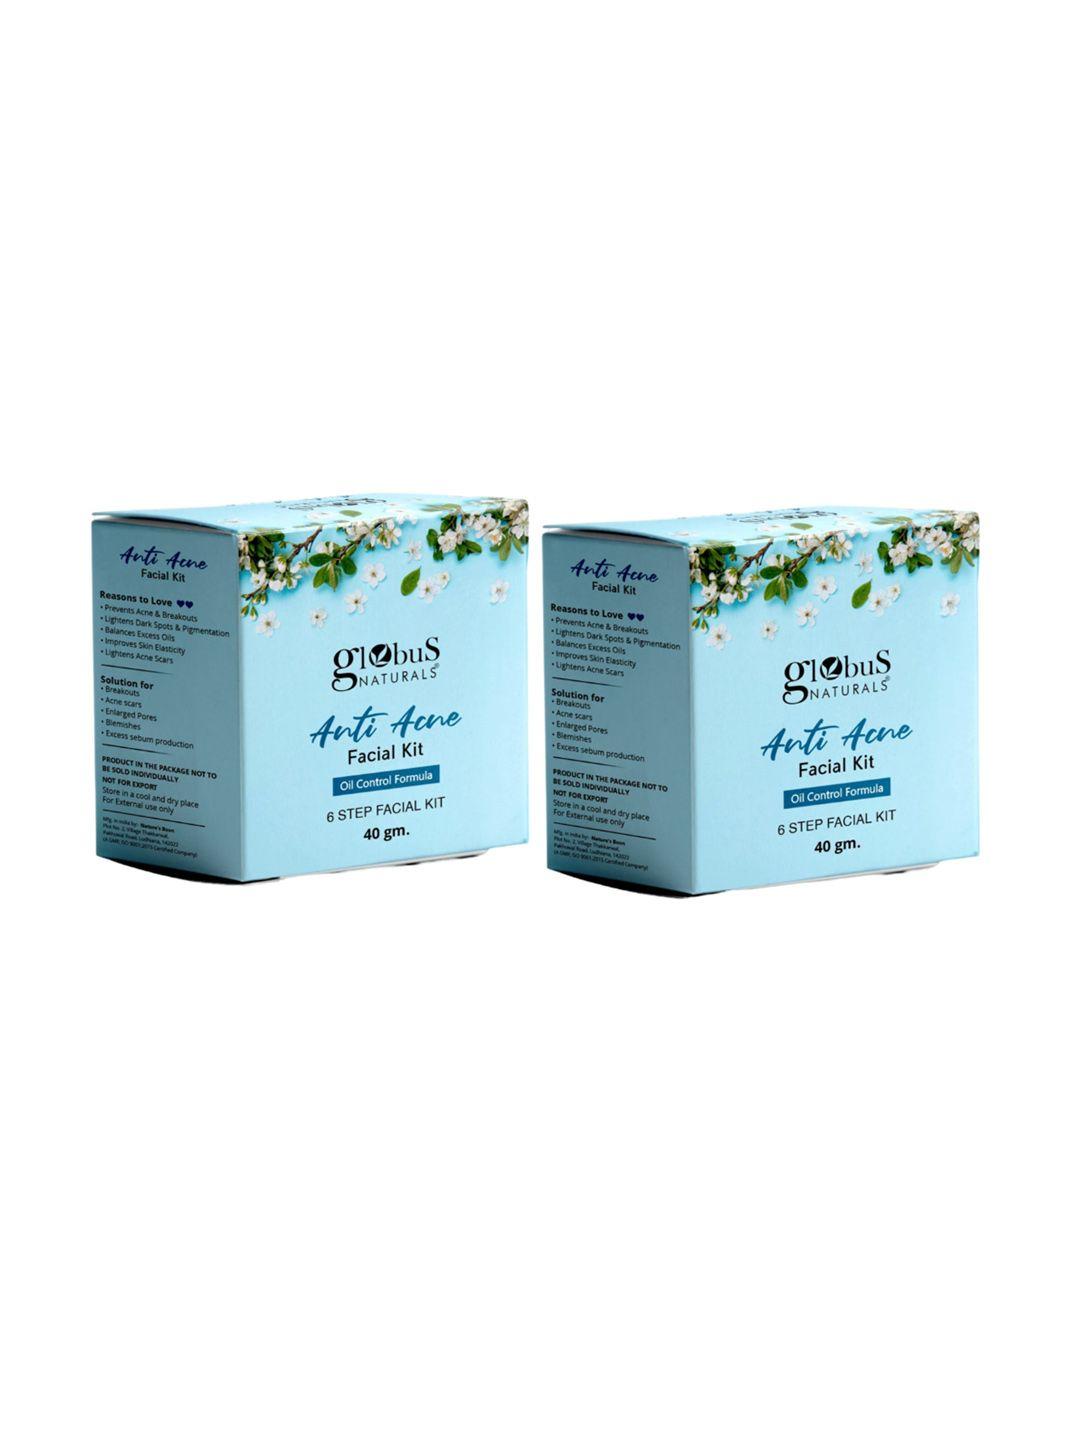 globus naturals 2-pcs anti acne facial kit for oil control - 40g each